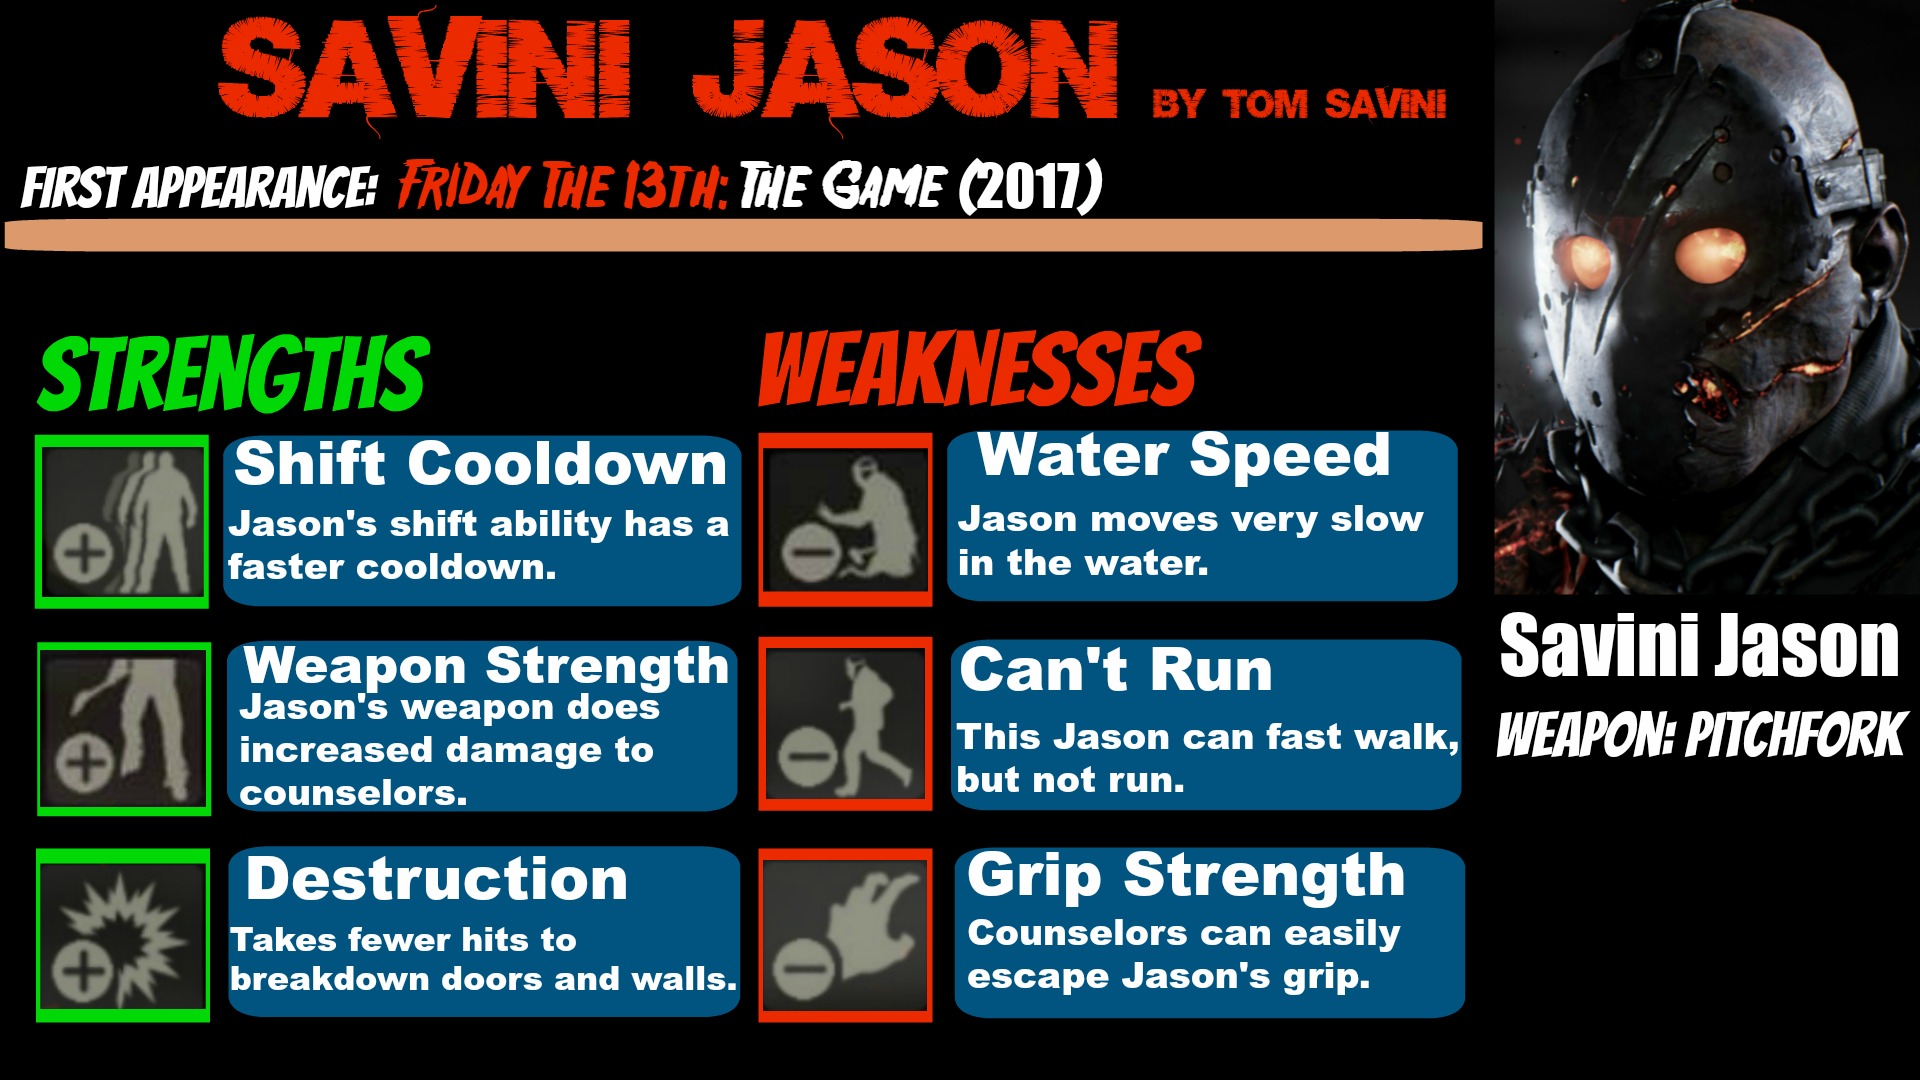 NEW SAVINI JASON!! (Friday the 13th Game) 